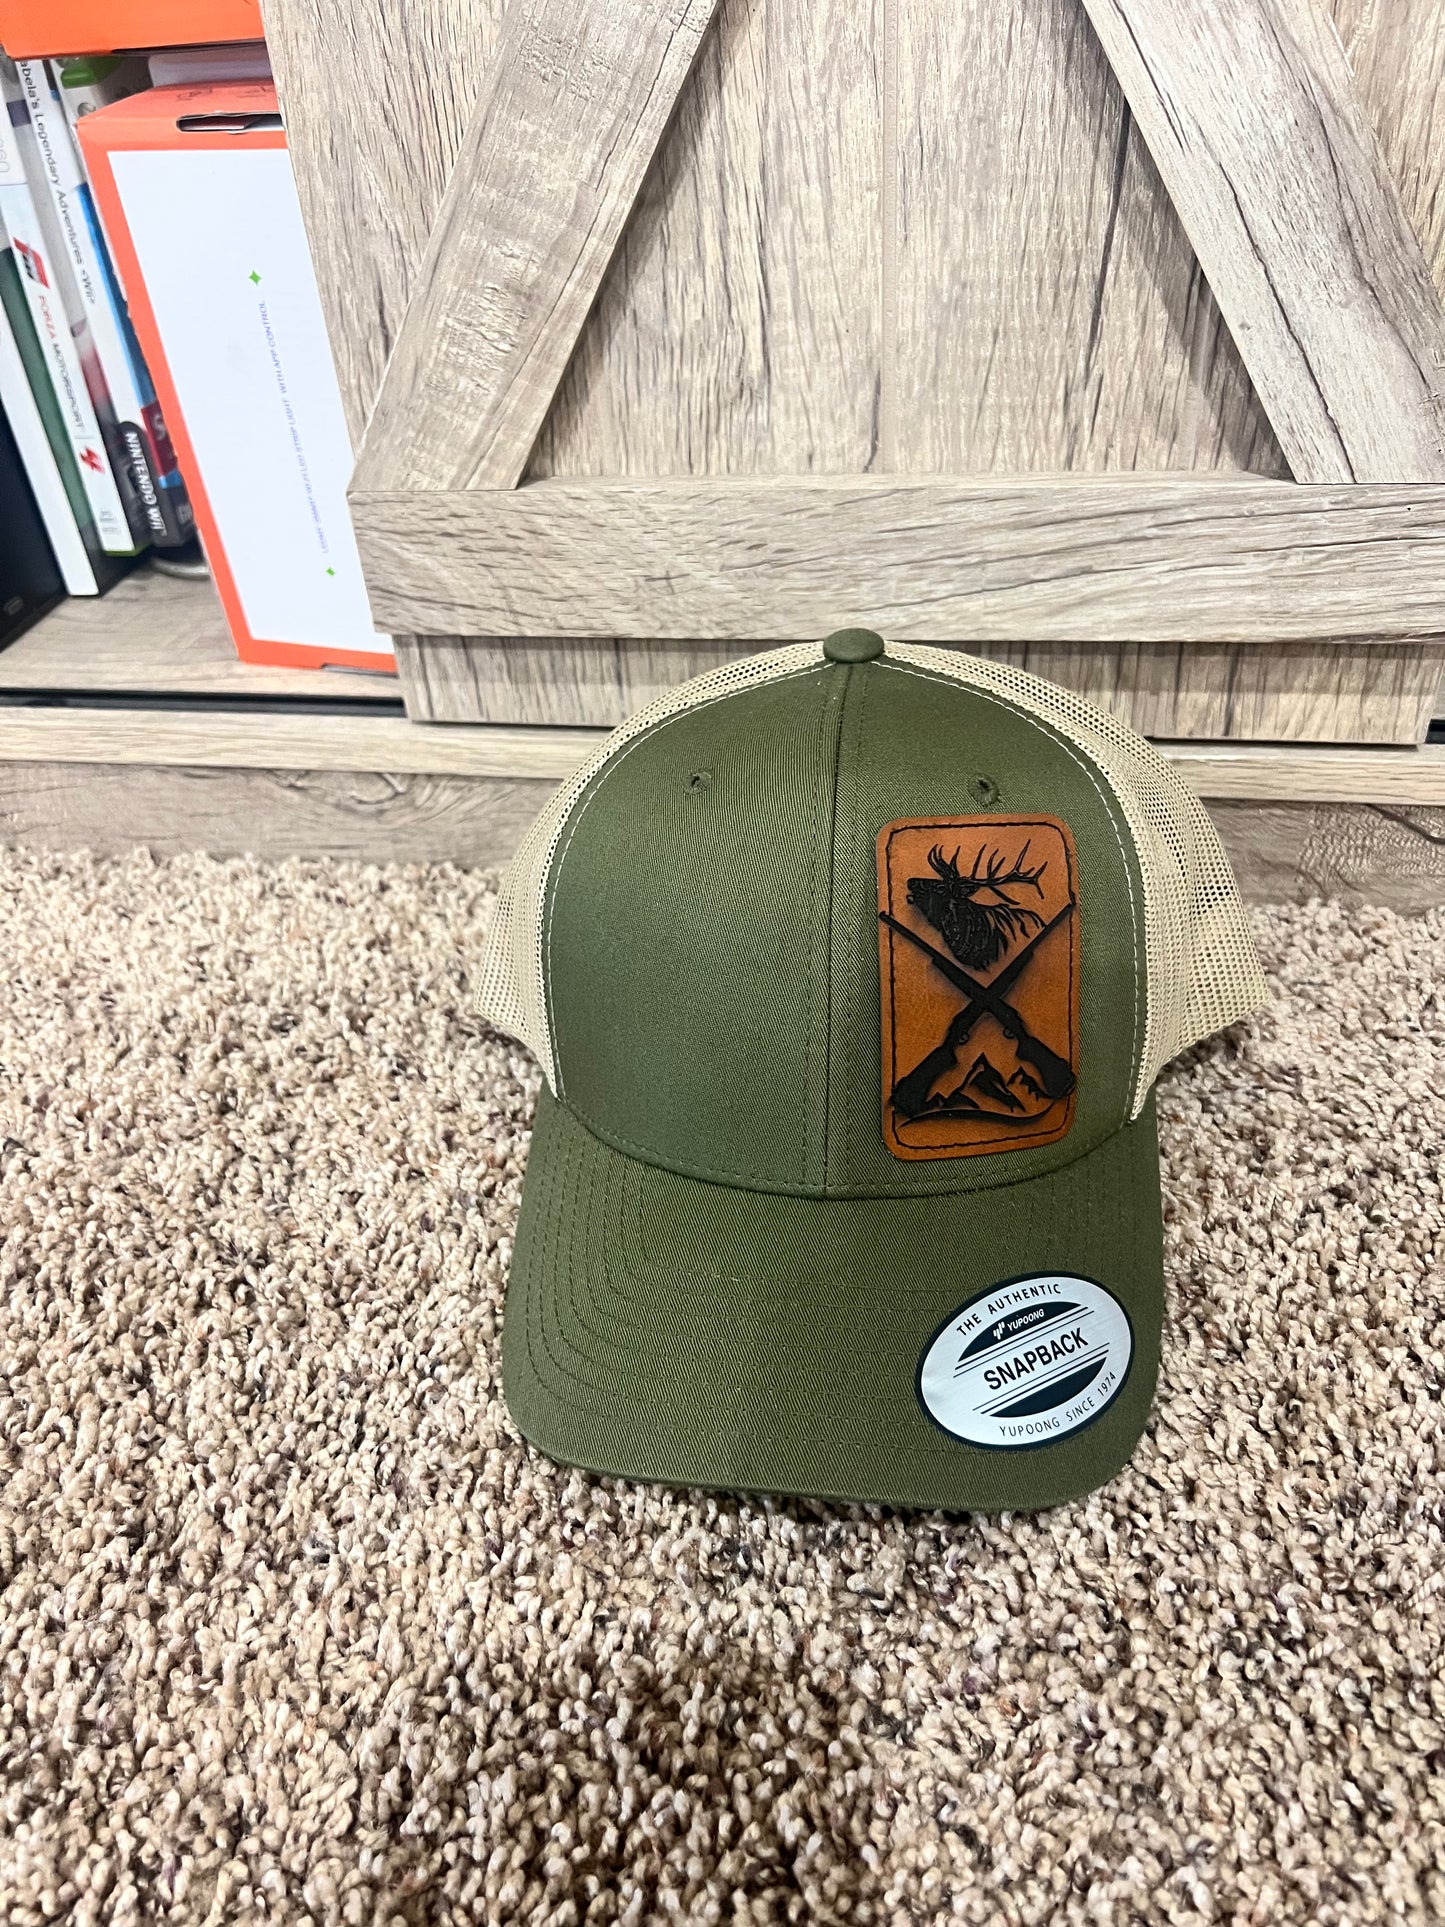 Green hunting hat